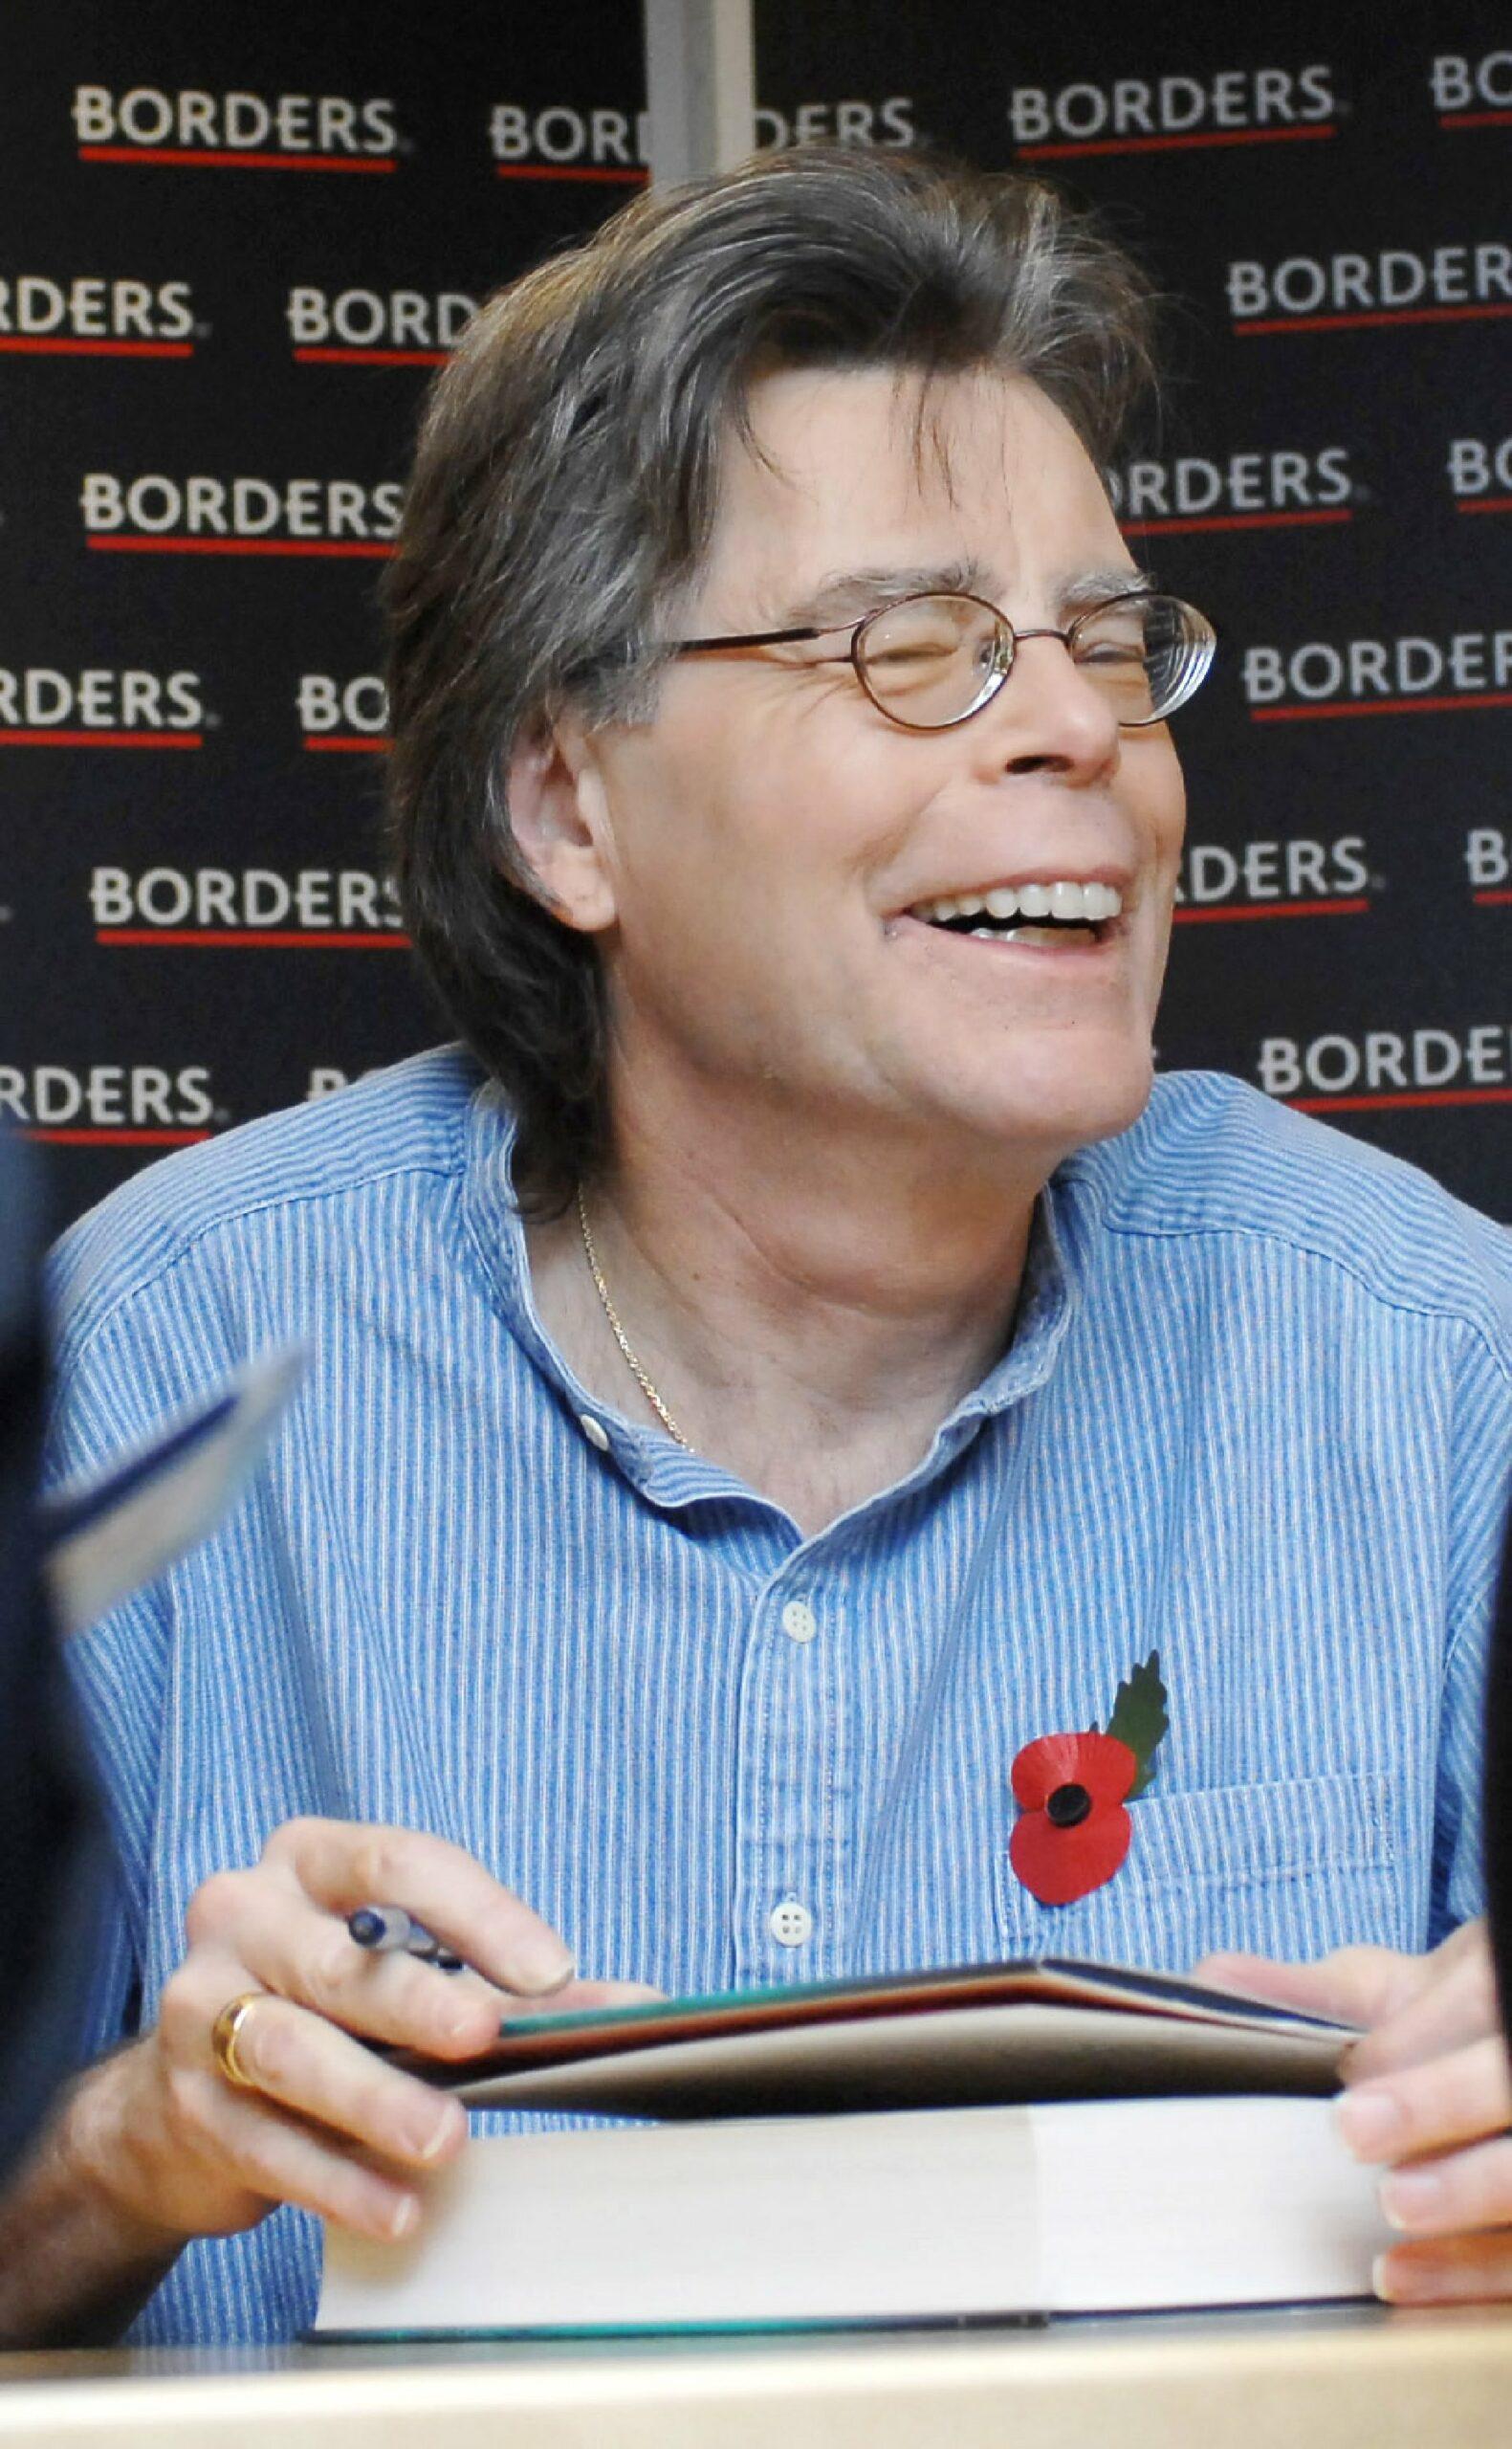 Stephen King signing copies of his new book 'Lisey's Story' at Borders on Oxford StreetLondon, England - 07.11.06Credit: WENN Newscom/(Mega Agency TagID: wennphotos422078.jpg) [Photo via Mega Agency]